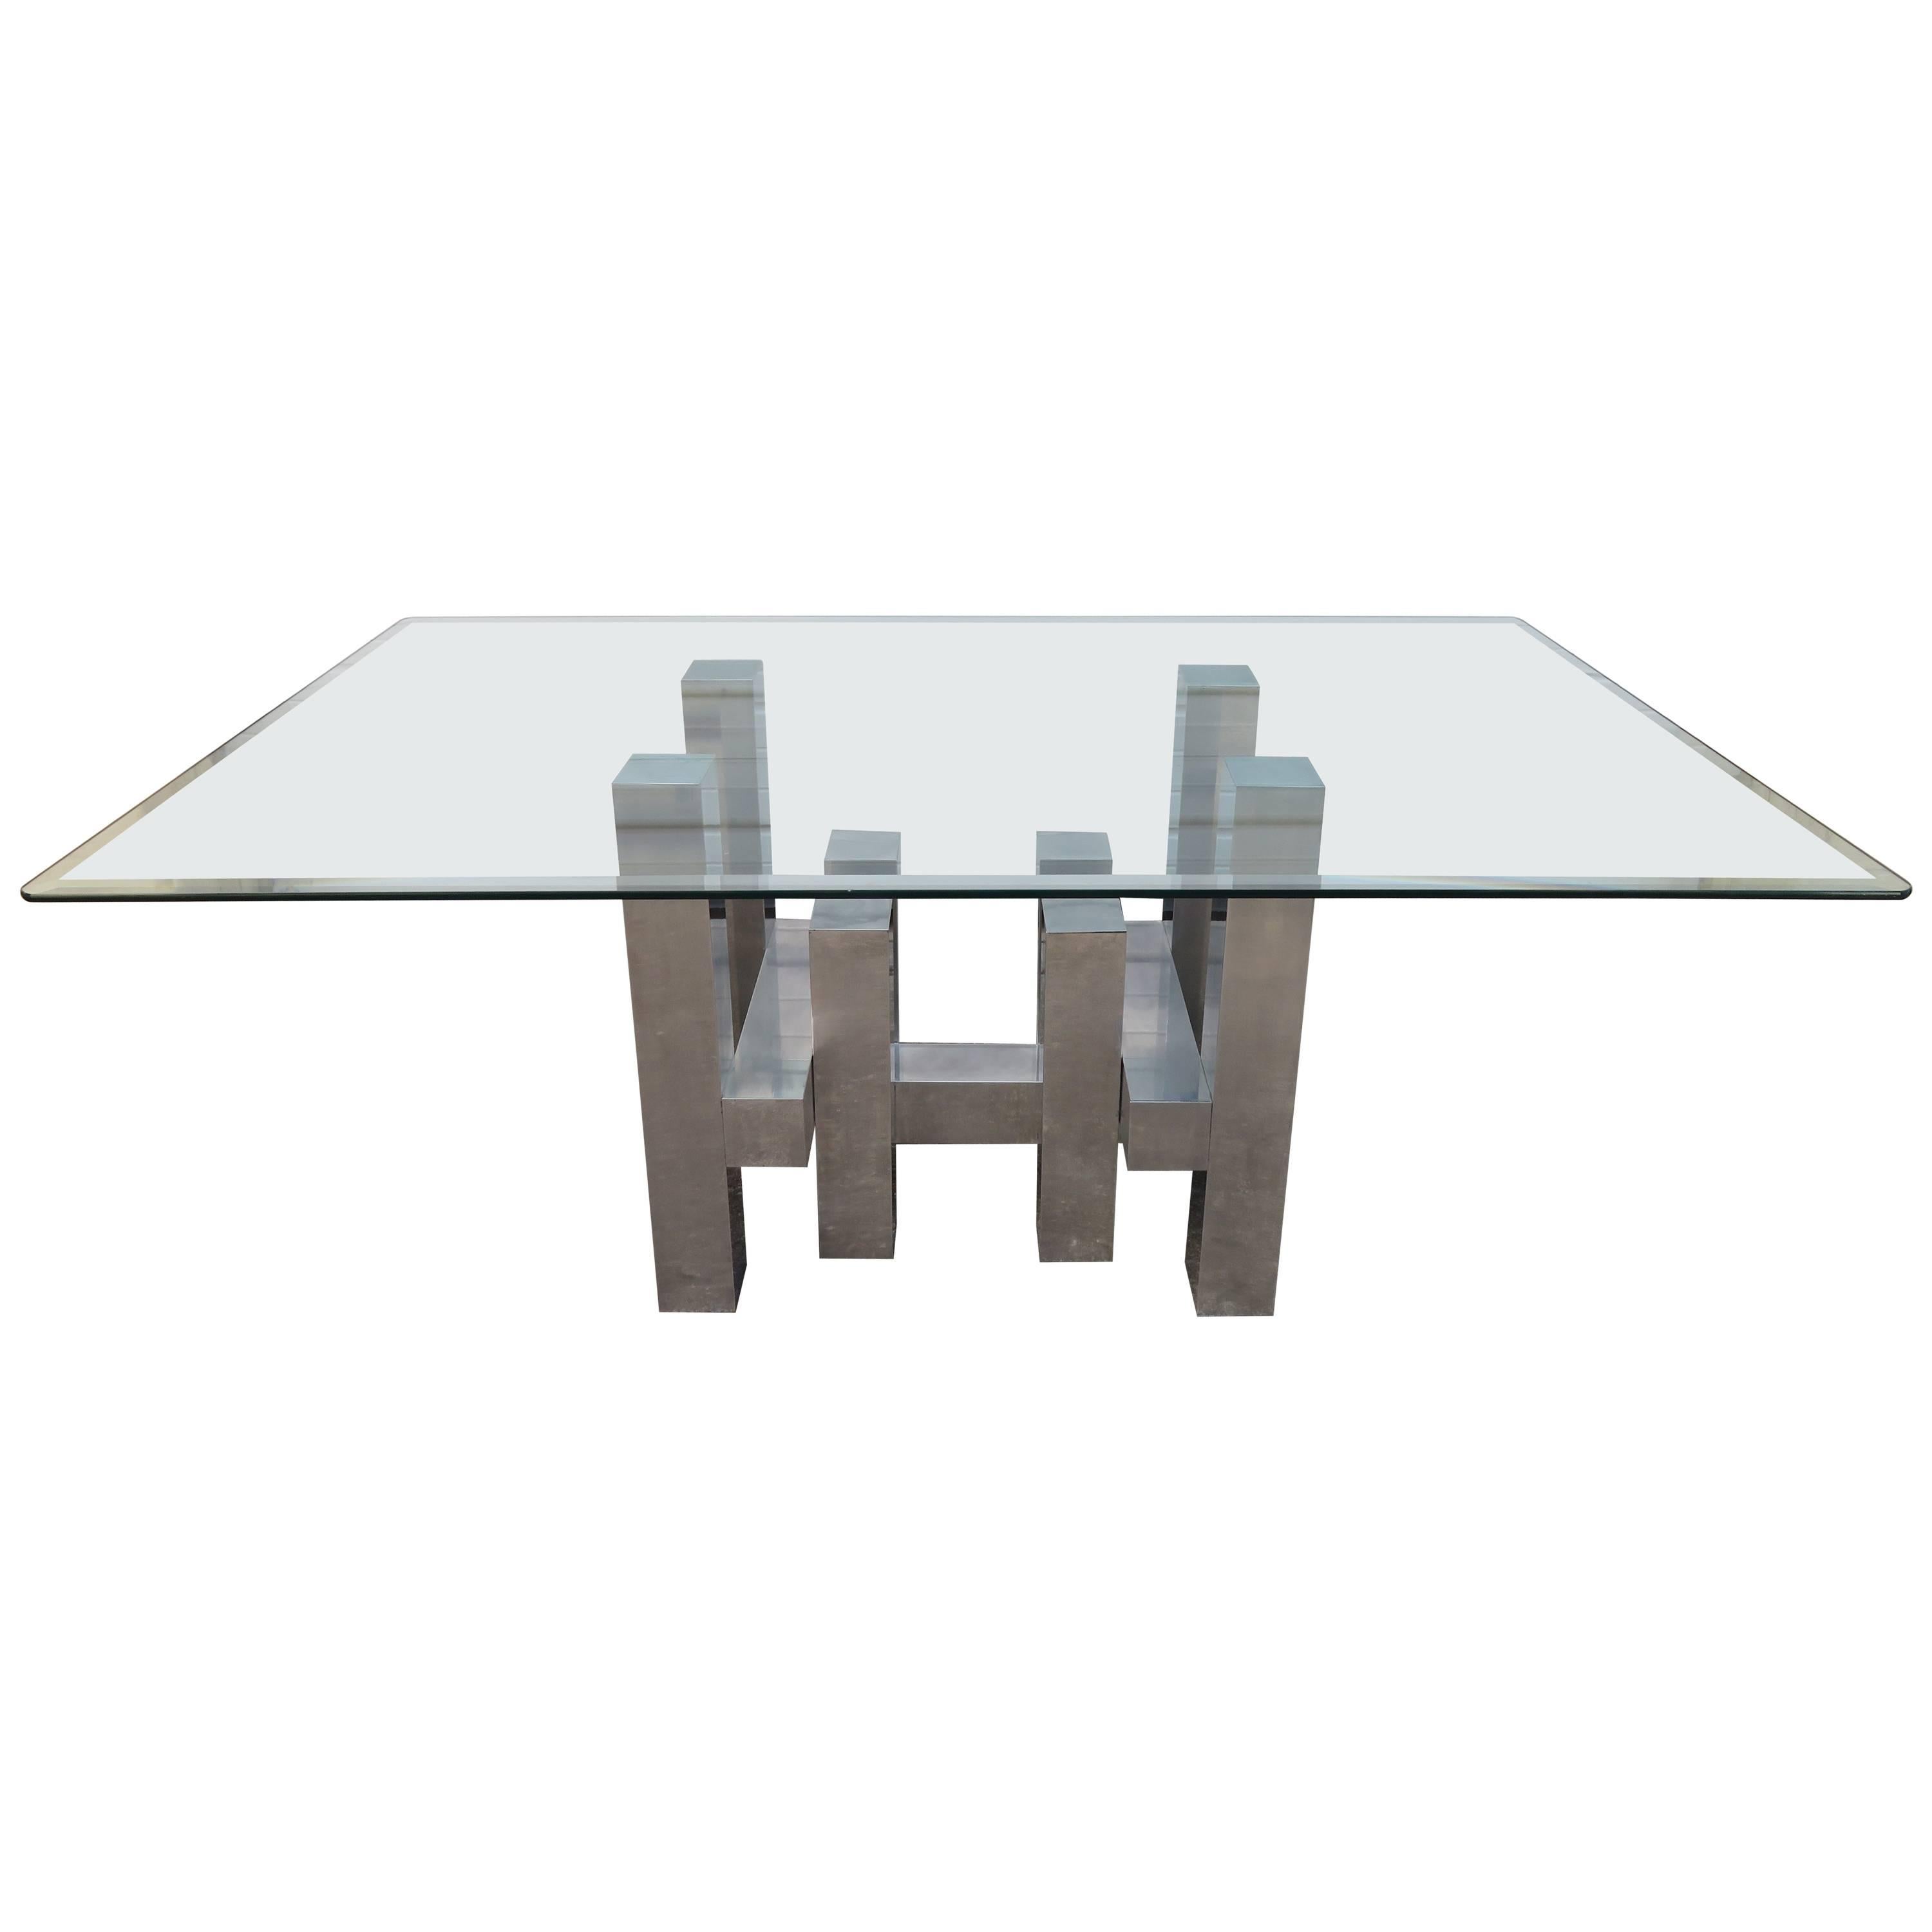 Stunning Architectural Aluminium Dining Table by Paul Mayen for Habitat